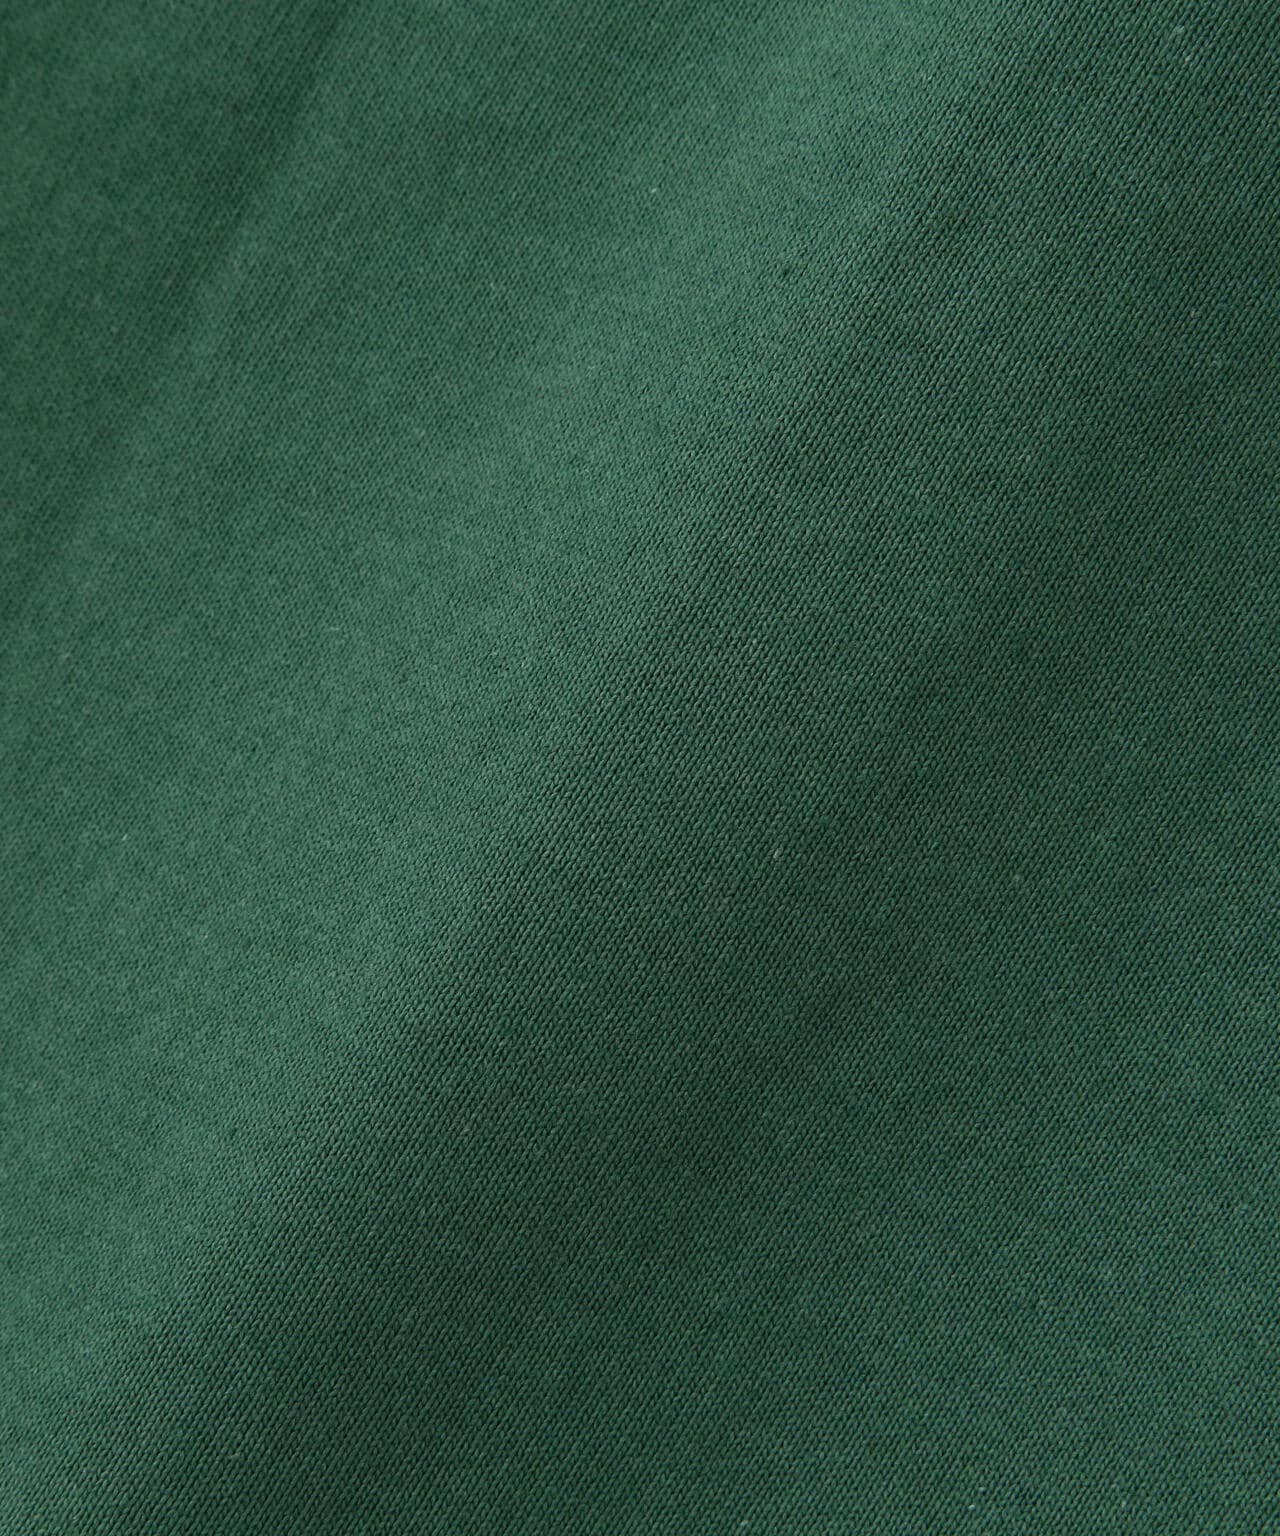 SOUVENIR POCKET SHORT SLEEVE T-SHIRT / スーベニア ポケット Tシャツ